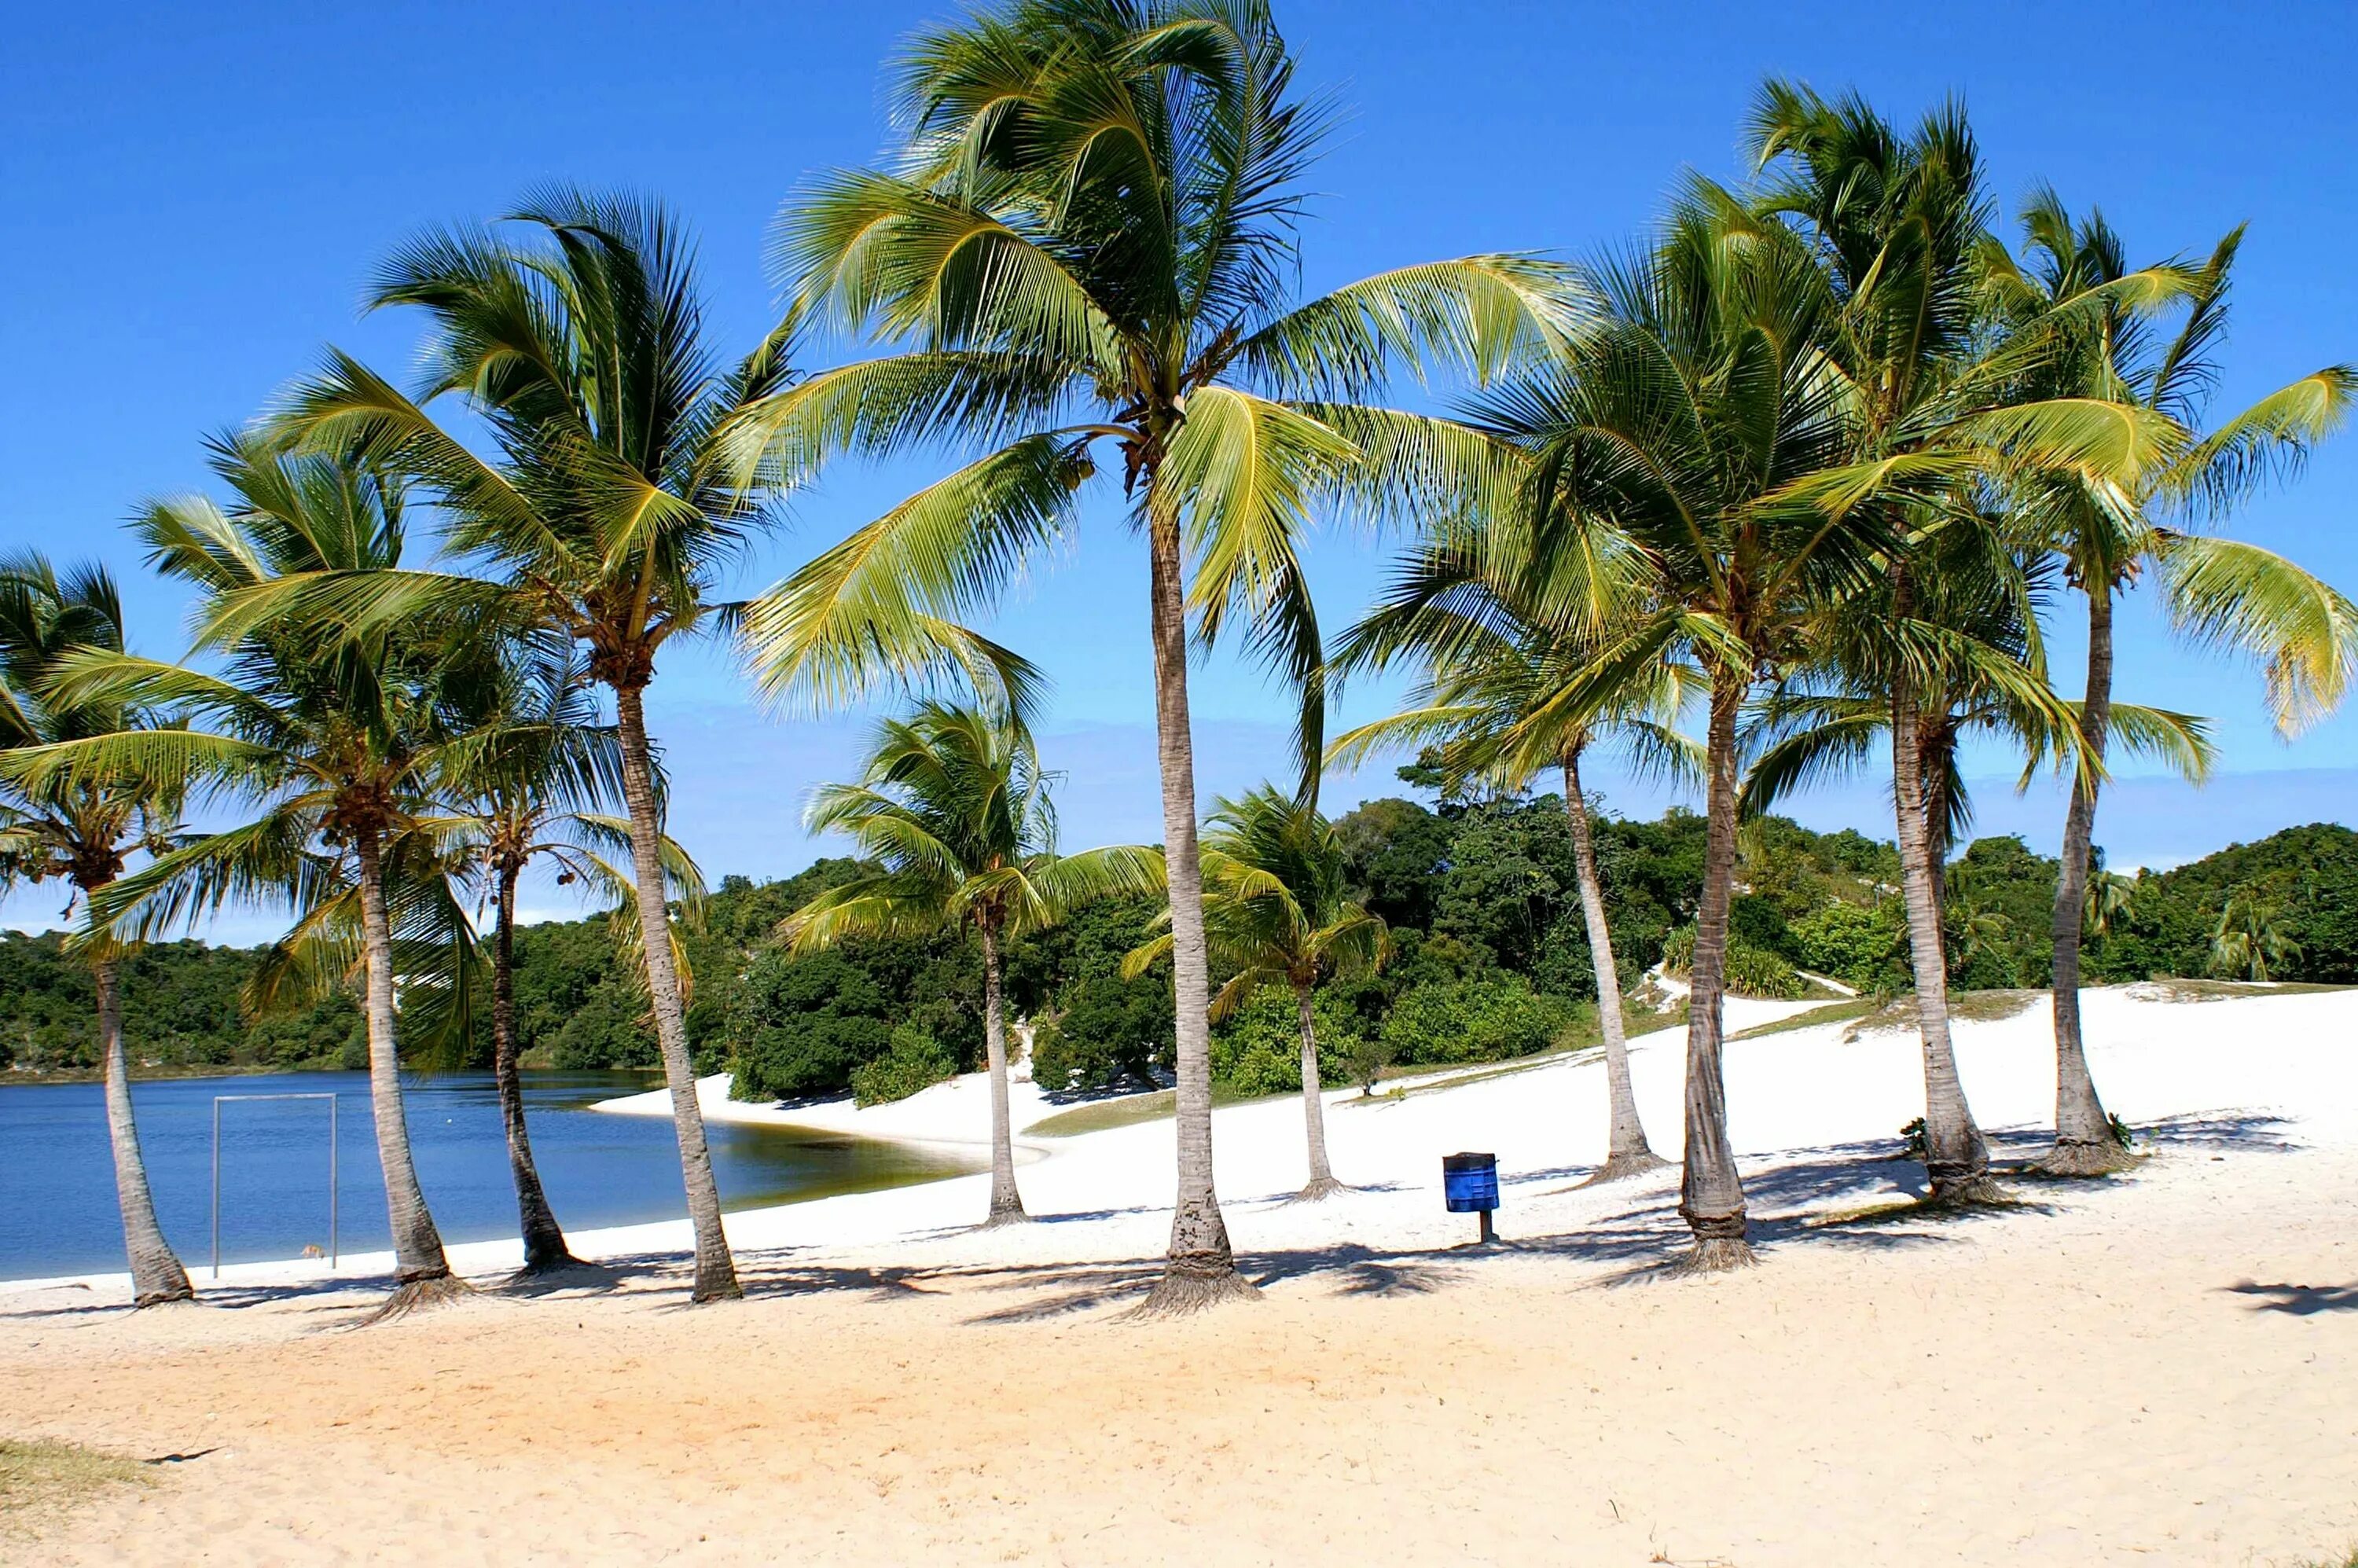 Baile do coqueiro 5 speed up. Bahia Brazil Beach. Порто-Праи на Сантьяго кокосовые пальмы. Бразилия портосехуа Бахия. Порто-Праи на Сантьяго порт кокосовые пальмы.